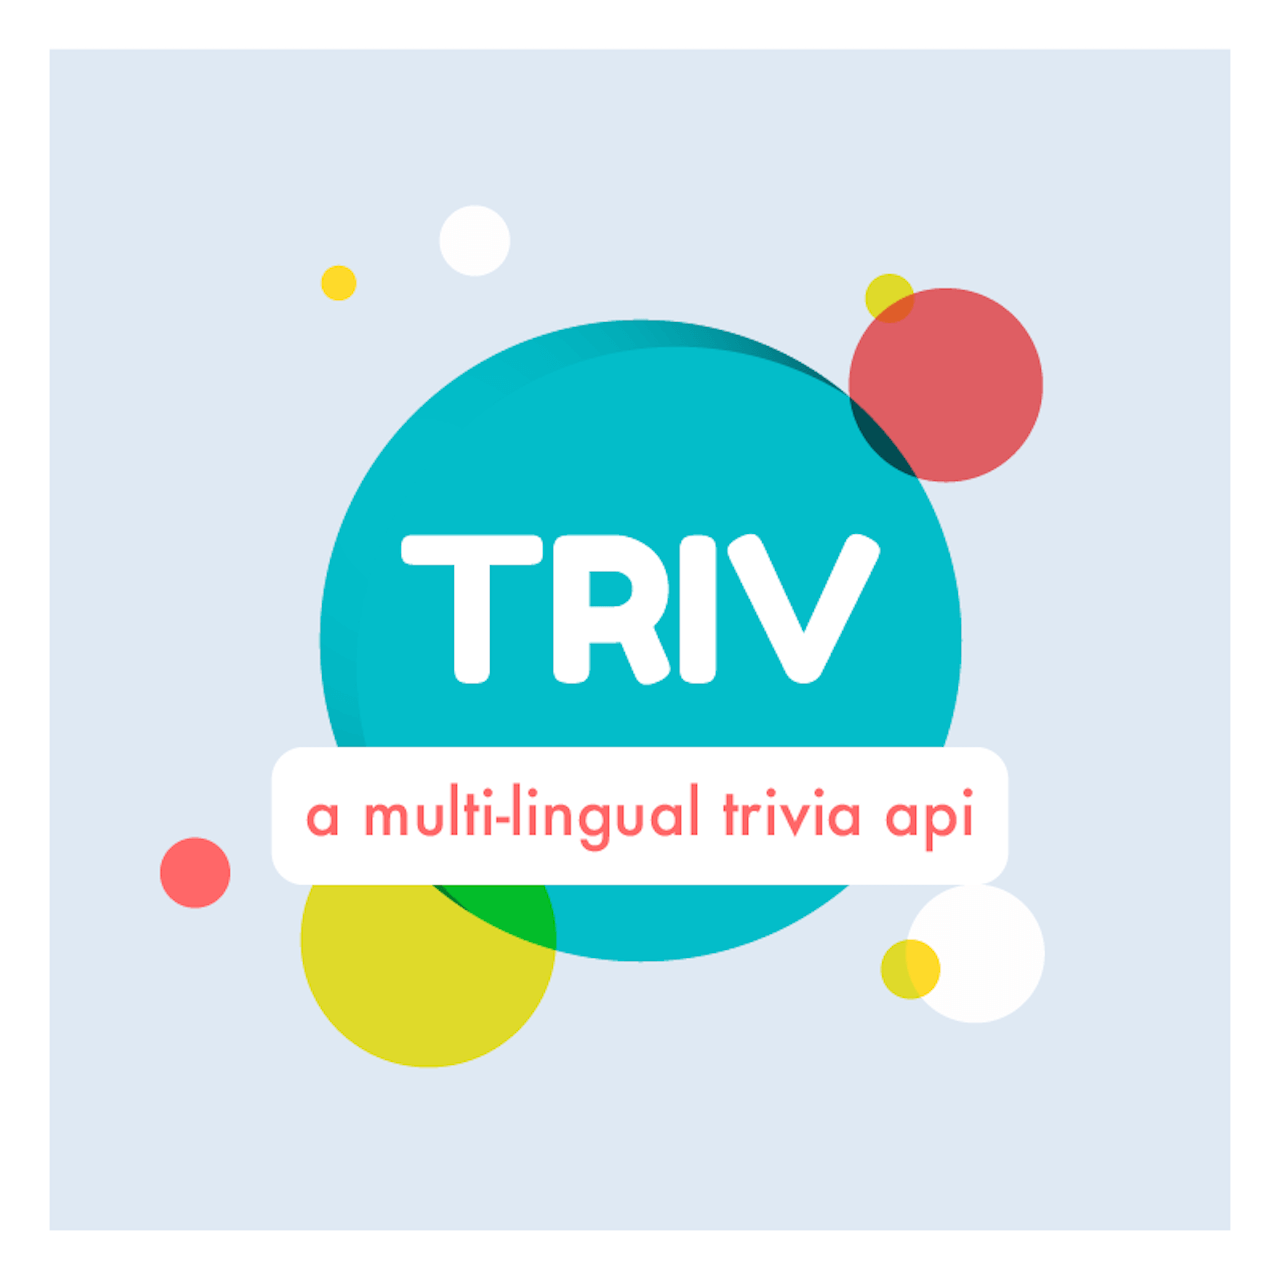 Triv multi-lingual trivia platform